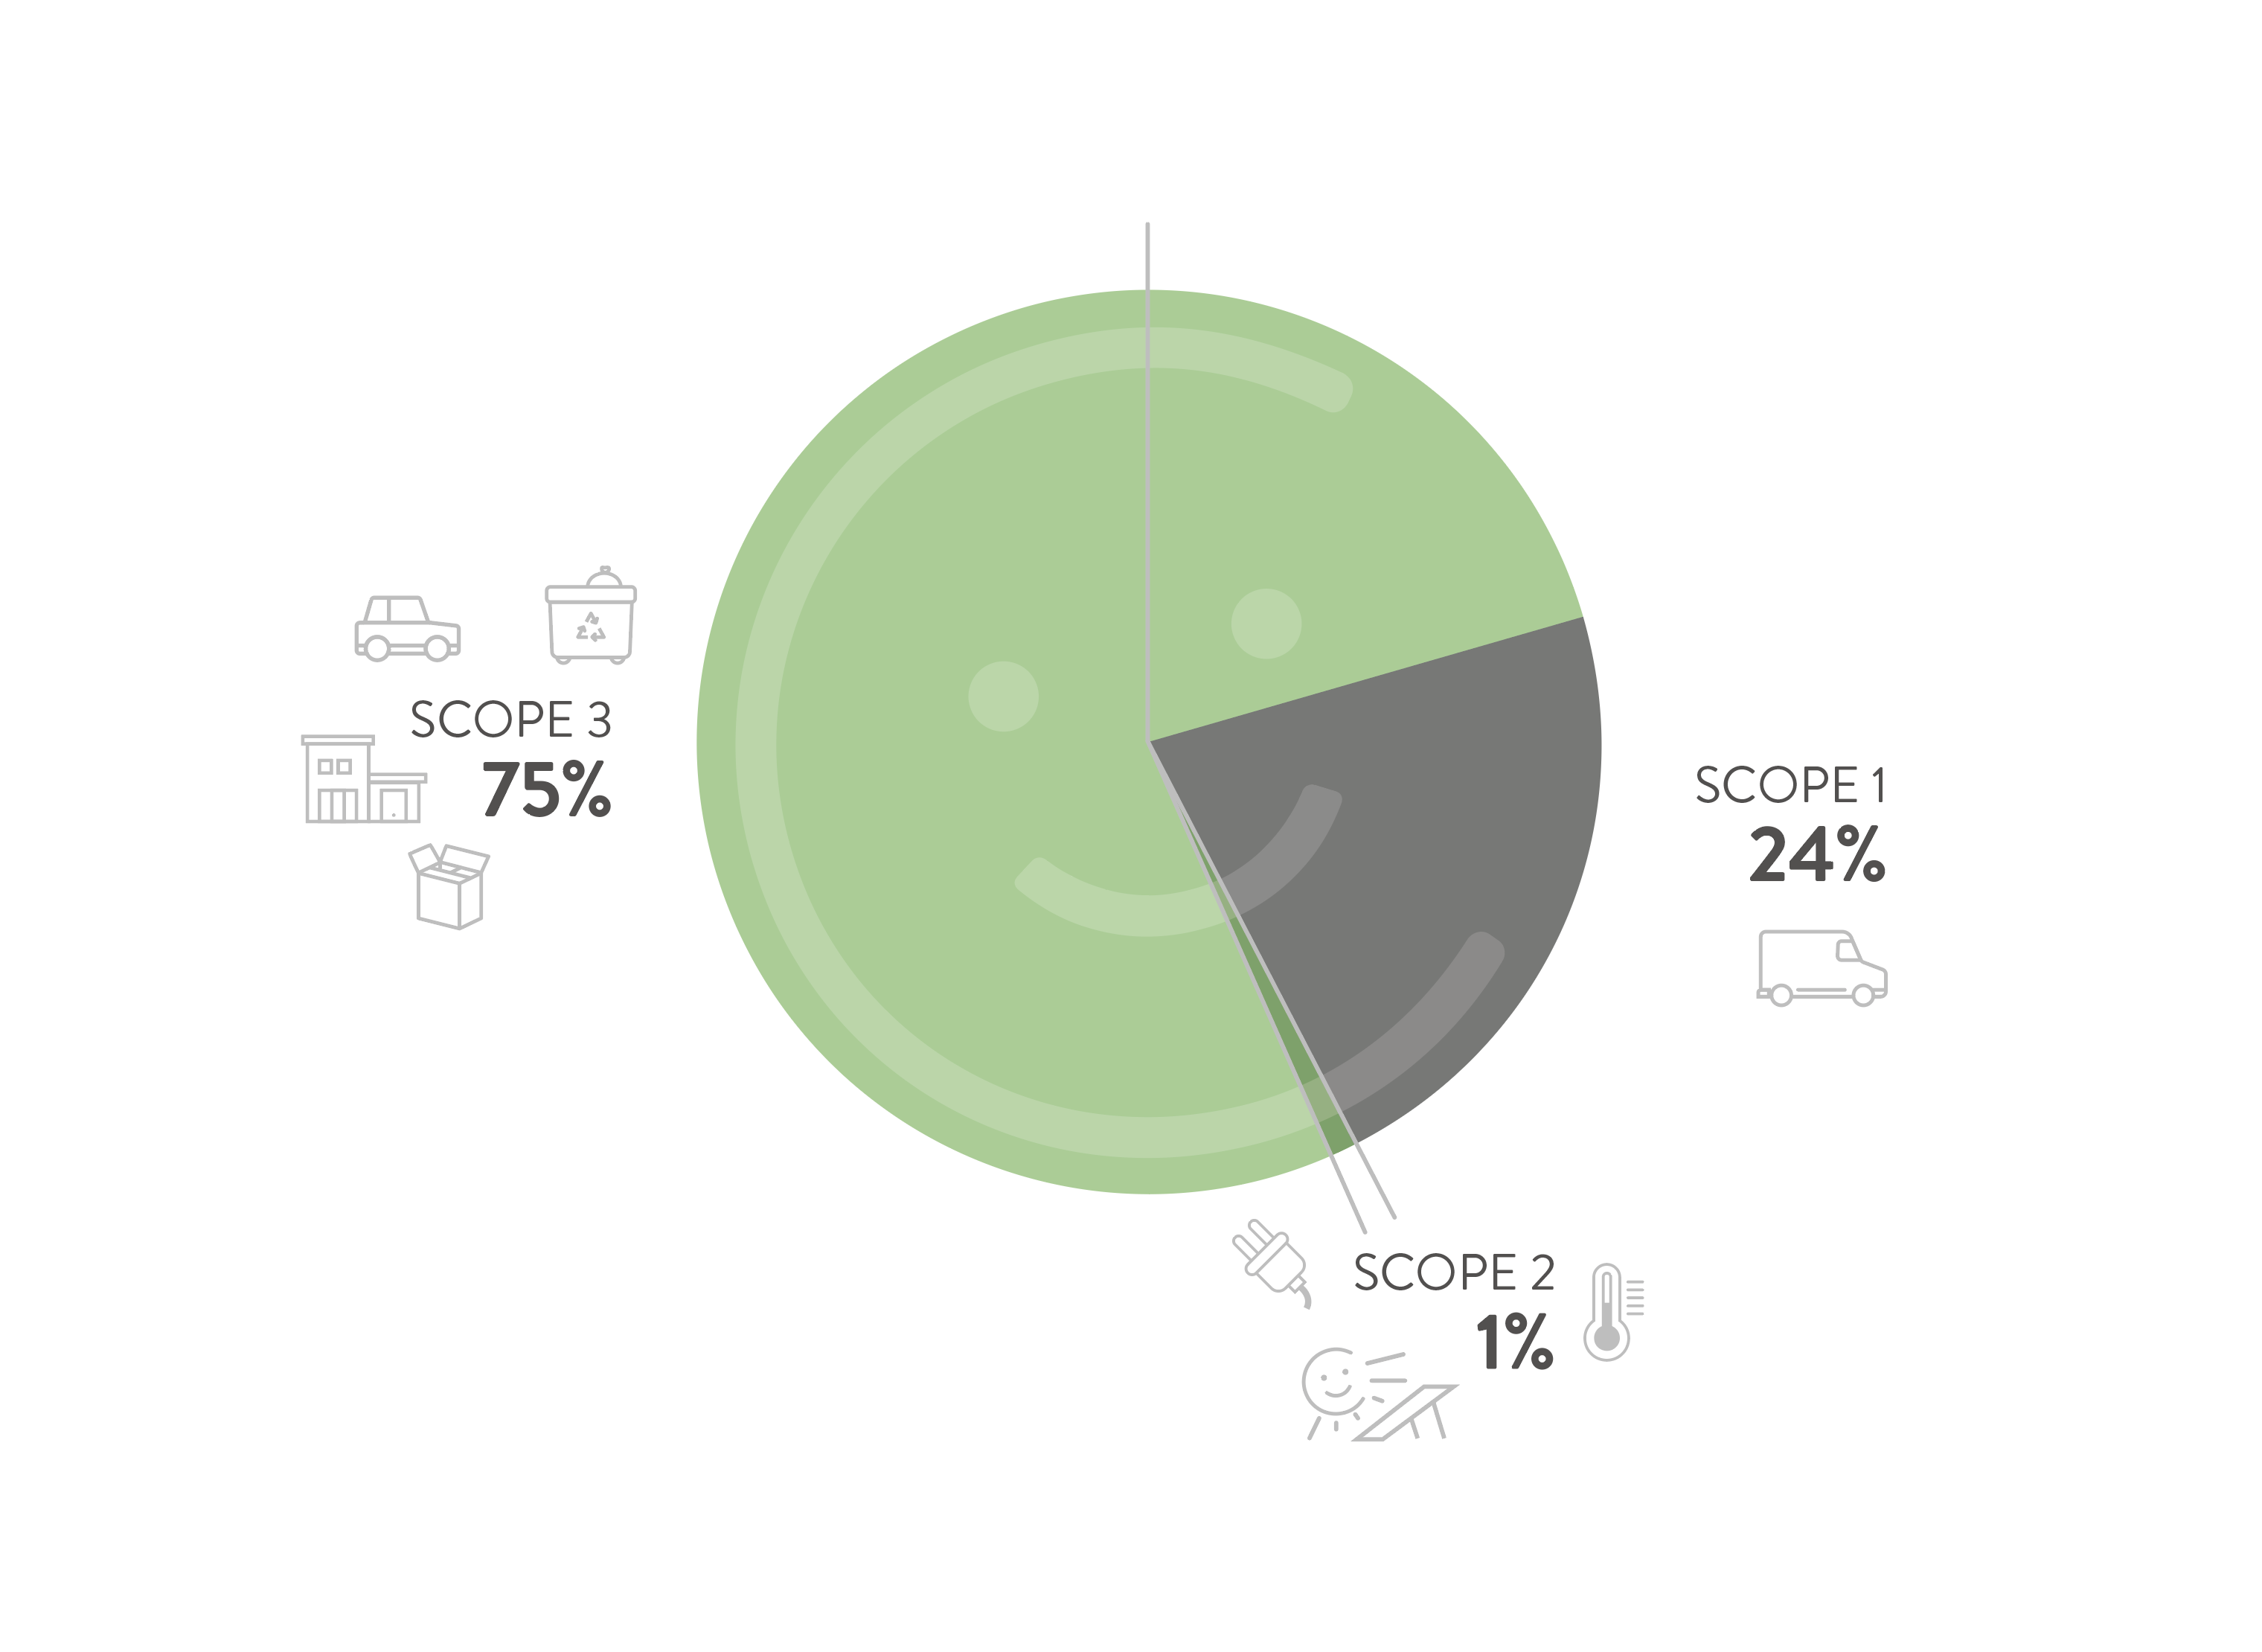 niceshop's percentage distribution across scopes 2021